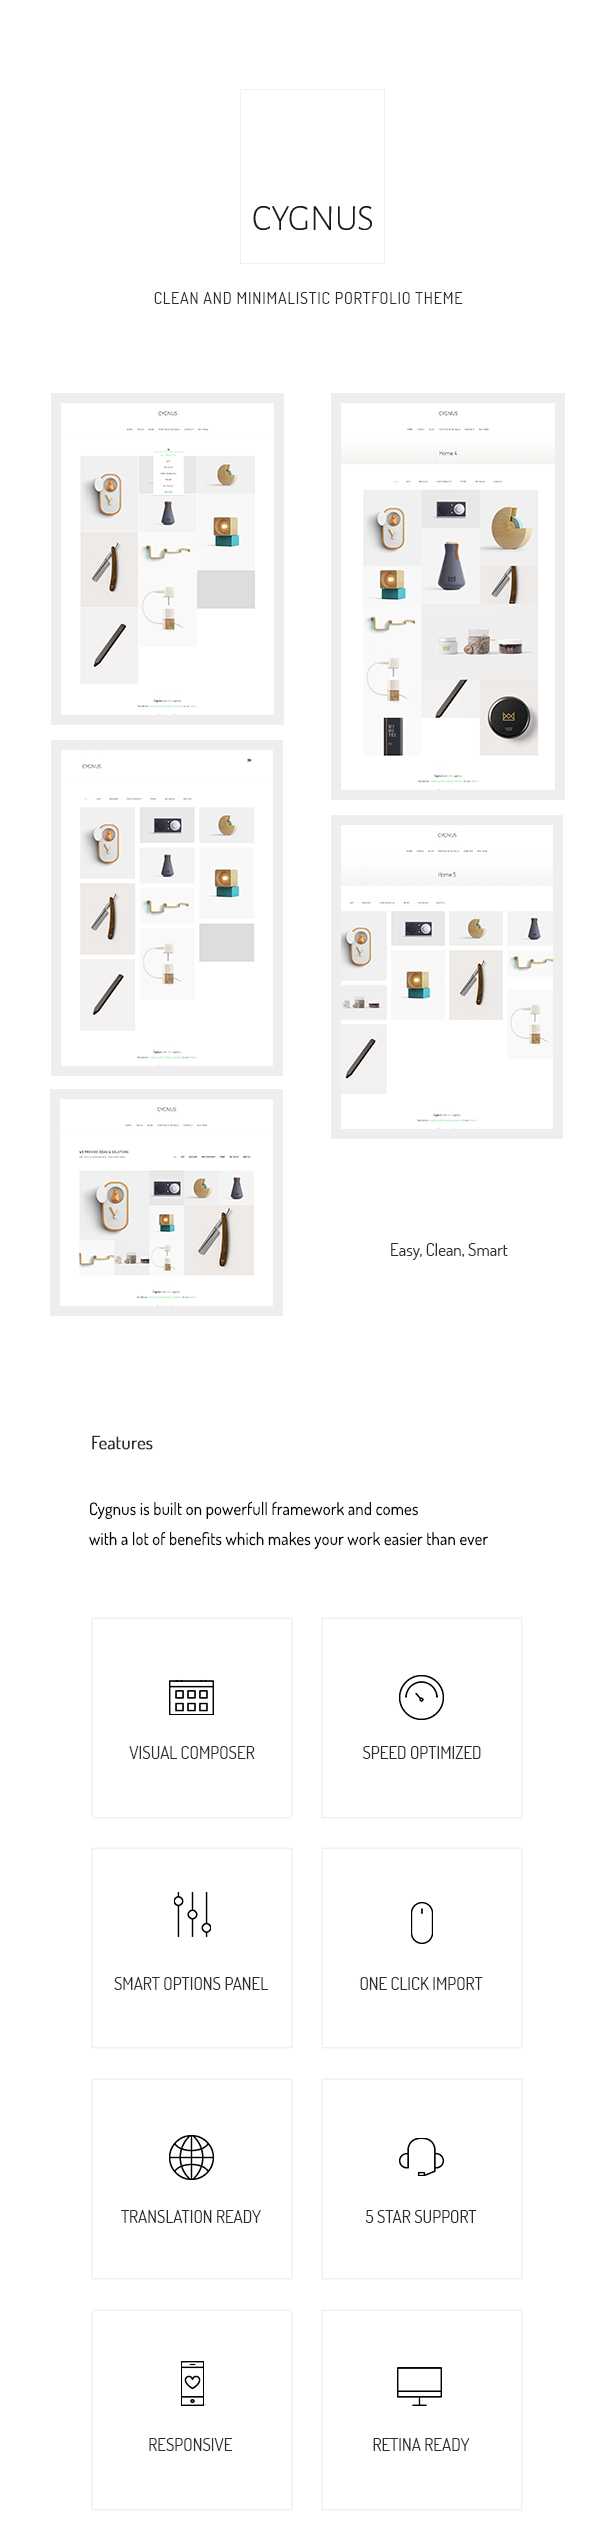 Cygnus - Clean and minimalistic portfolio theme - 1